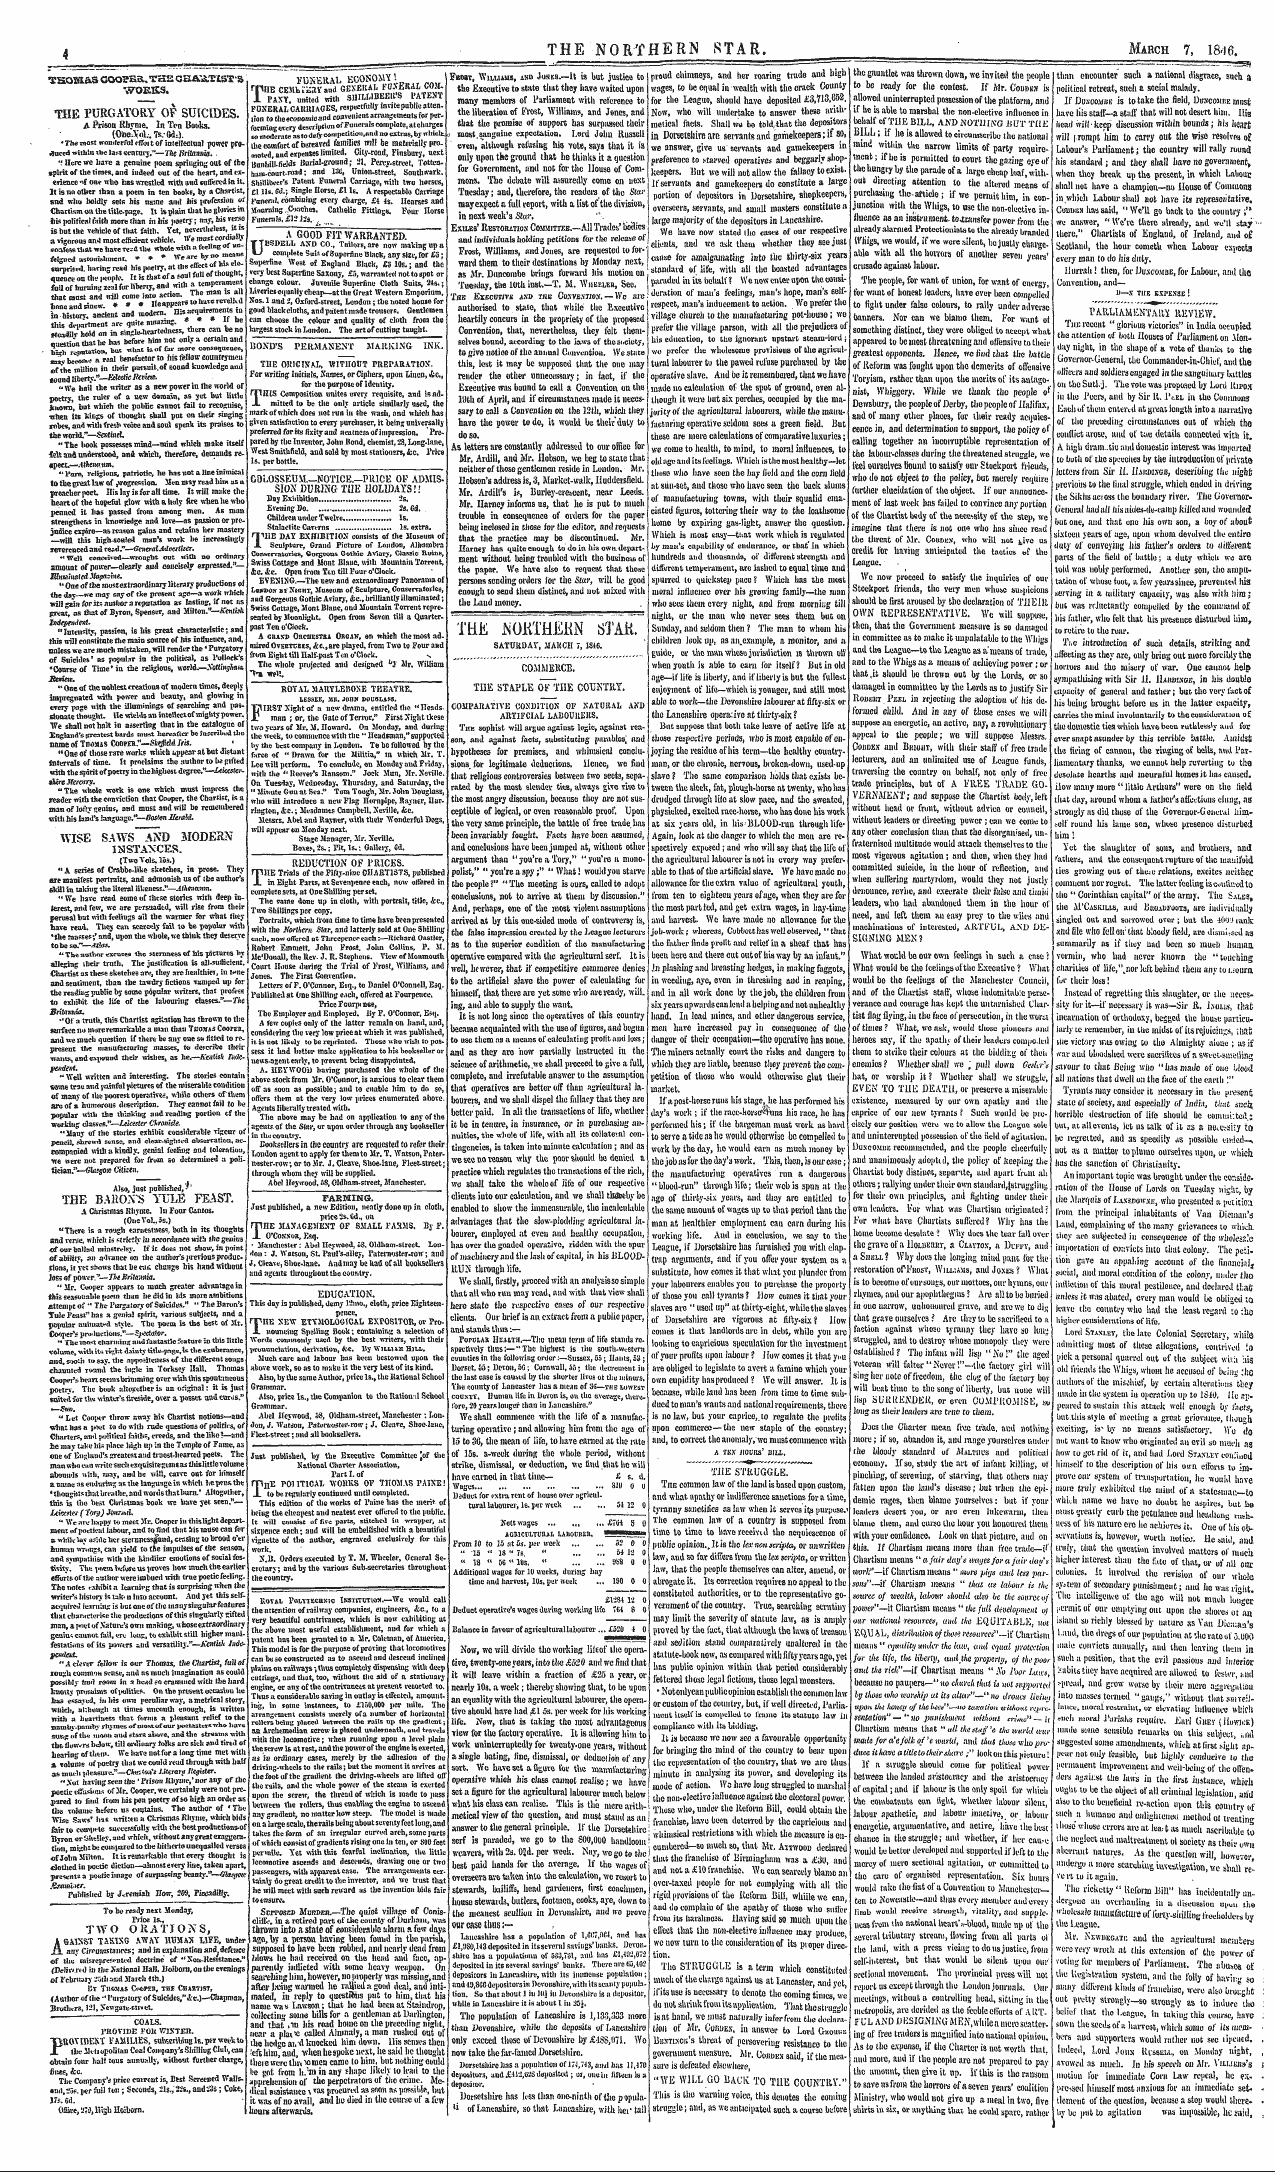 Northern Star (1837-1852): jS F Y, 2nd edition - I'Tie Lnokthekin Stak. Saturday, Ifakcii 7, 1846.